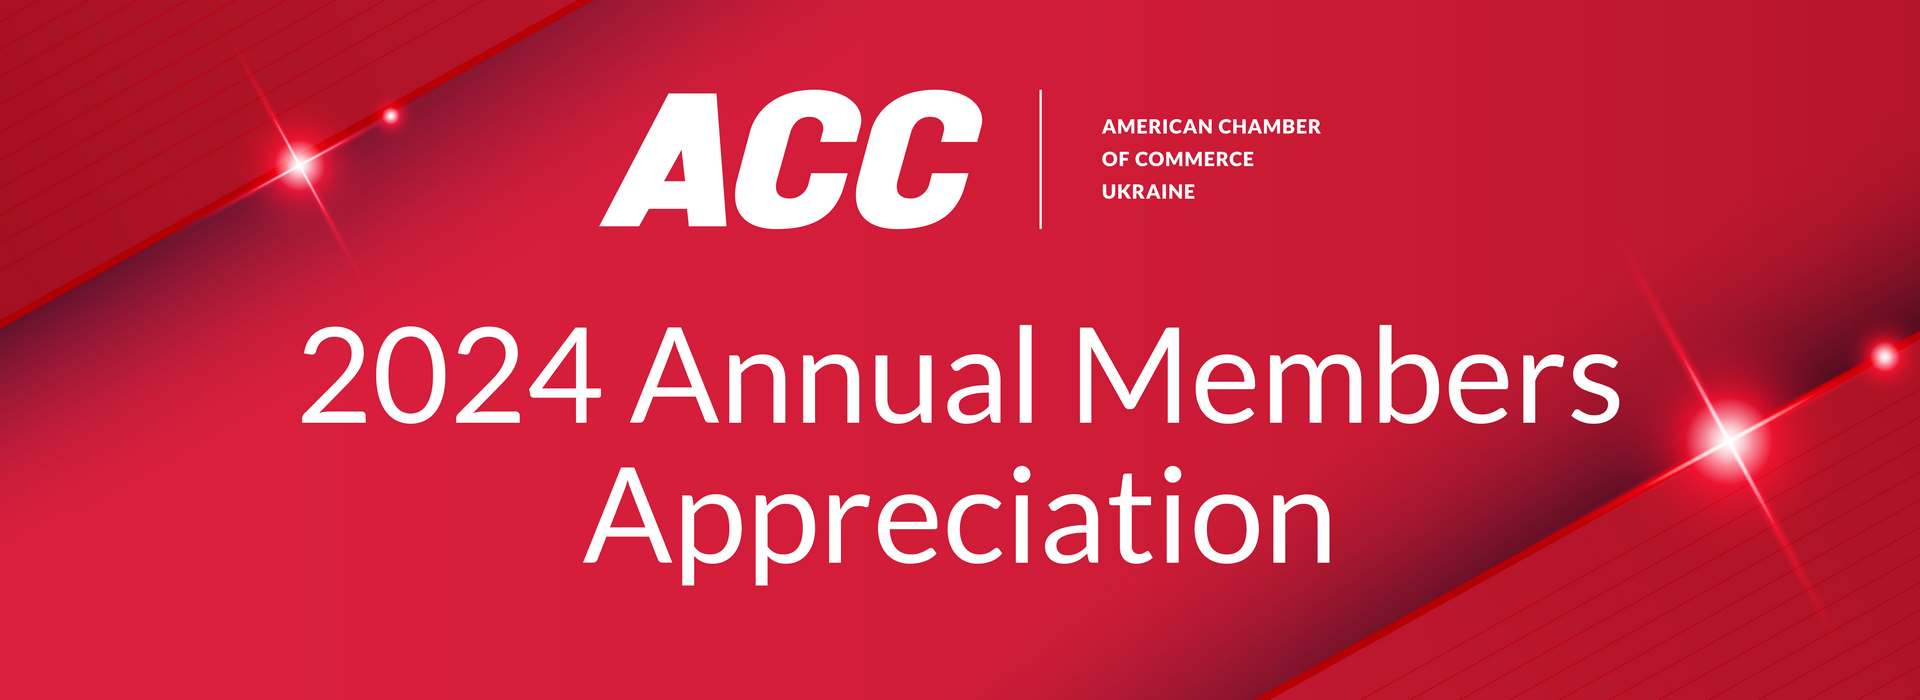 AmCham Annual Members Appreciation